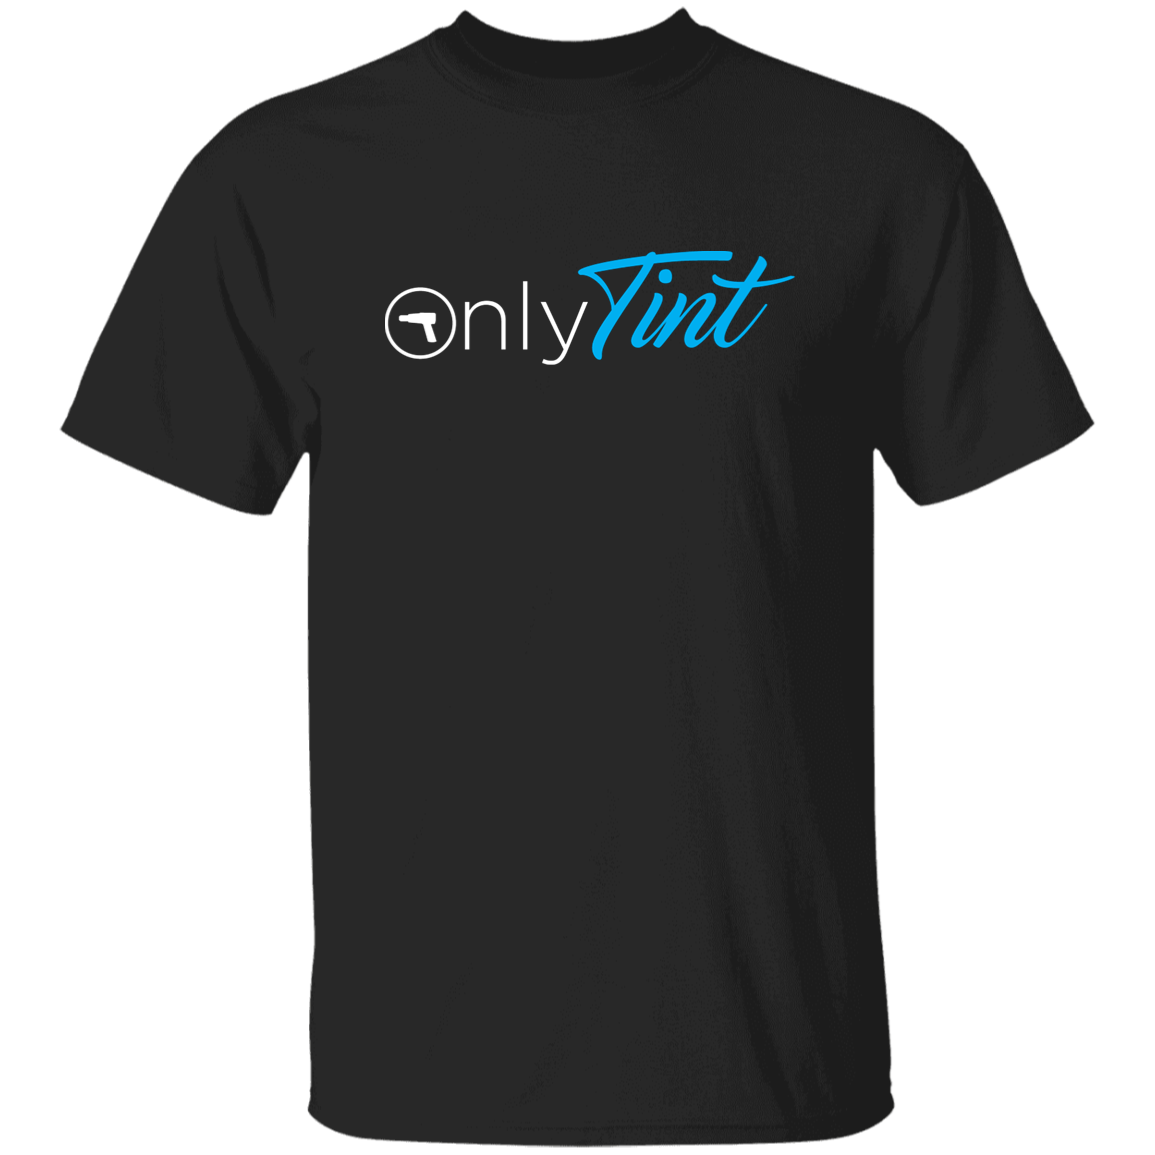 OnlyTint T-Shirt